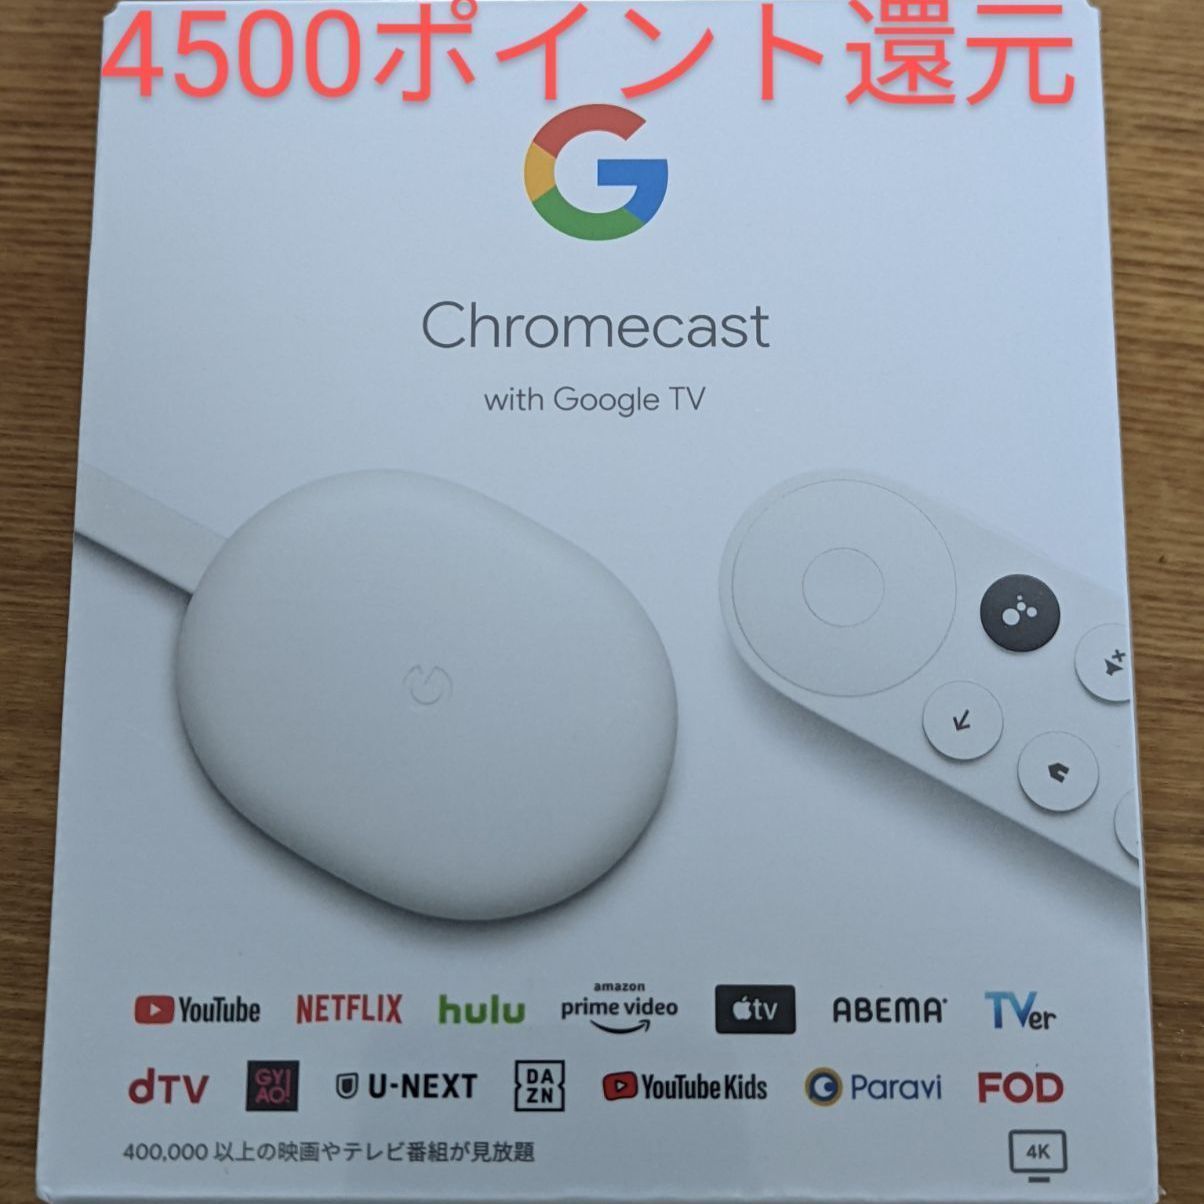 Chromecast with Google TV 新品未開封 - メルカリ